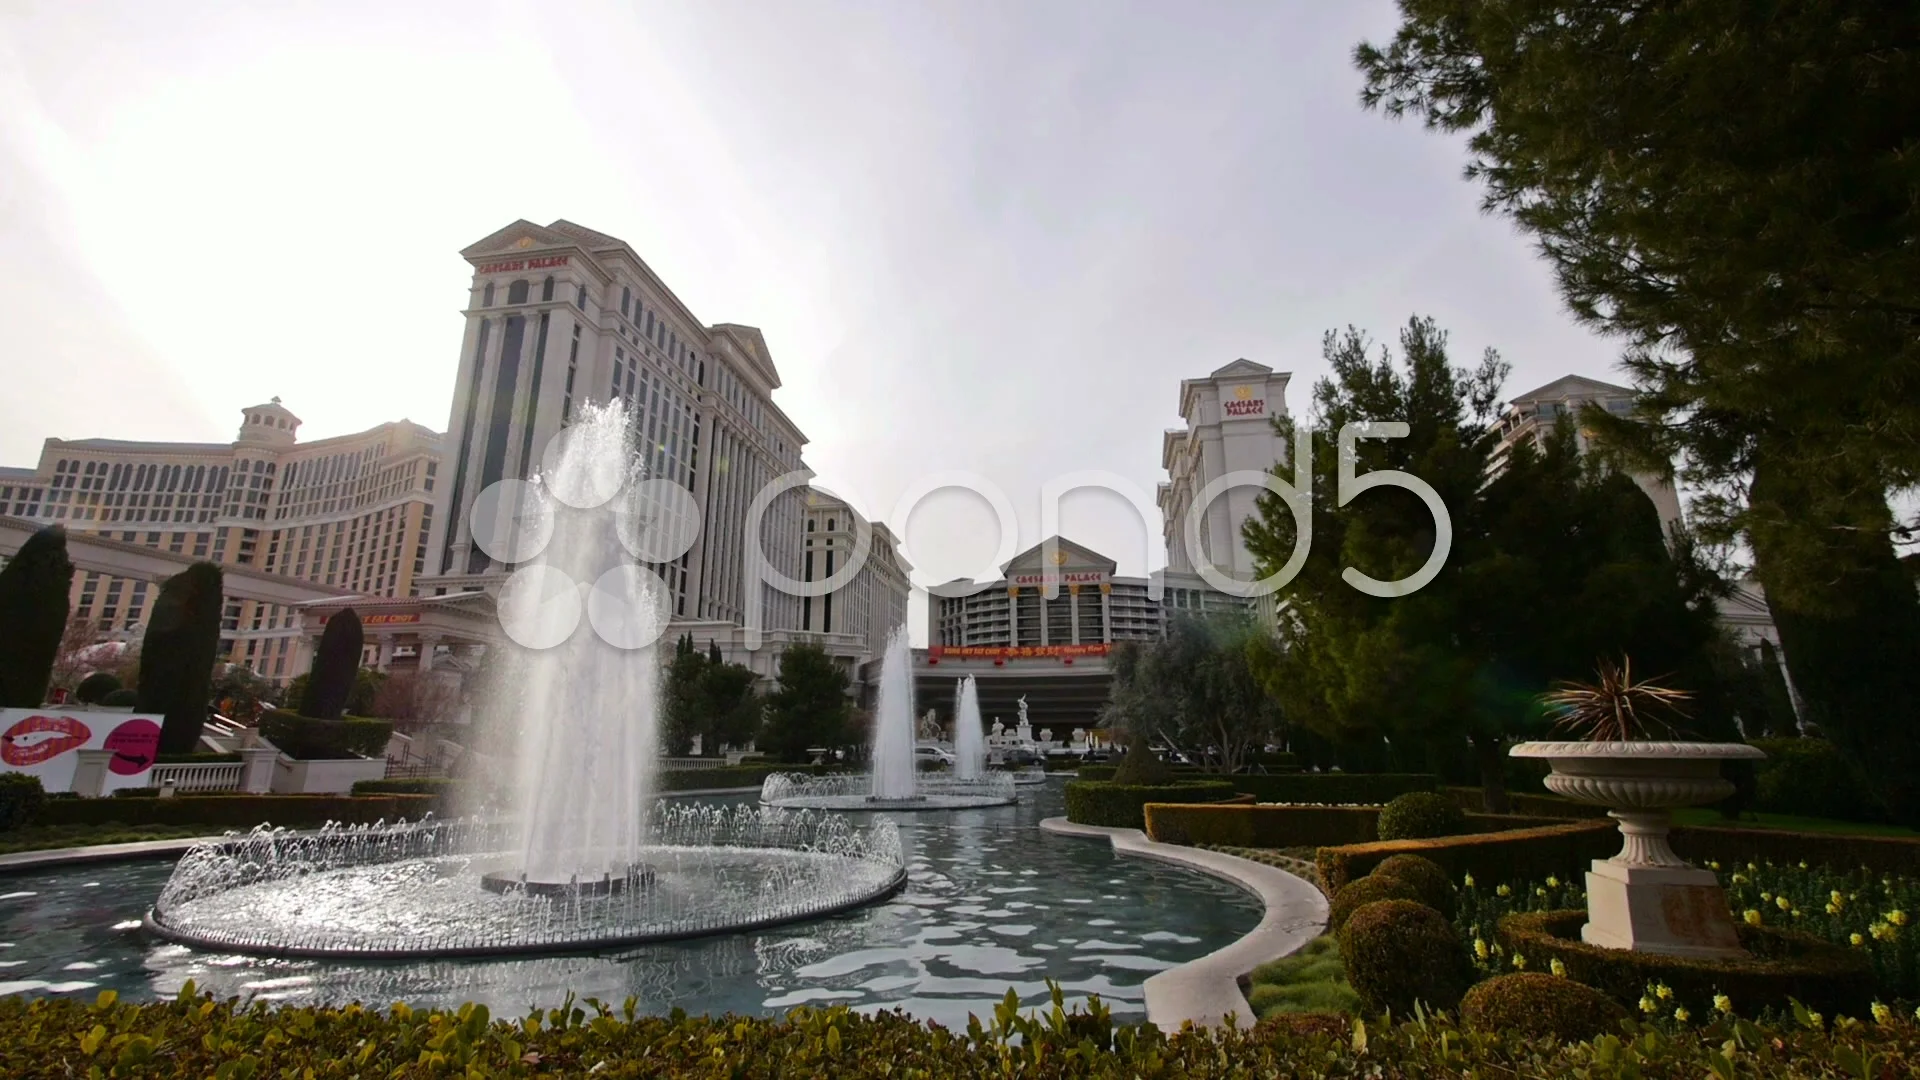 Fountain in the Caesars Palace, Las Vegas by KennyartVargas on